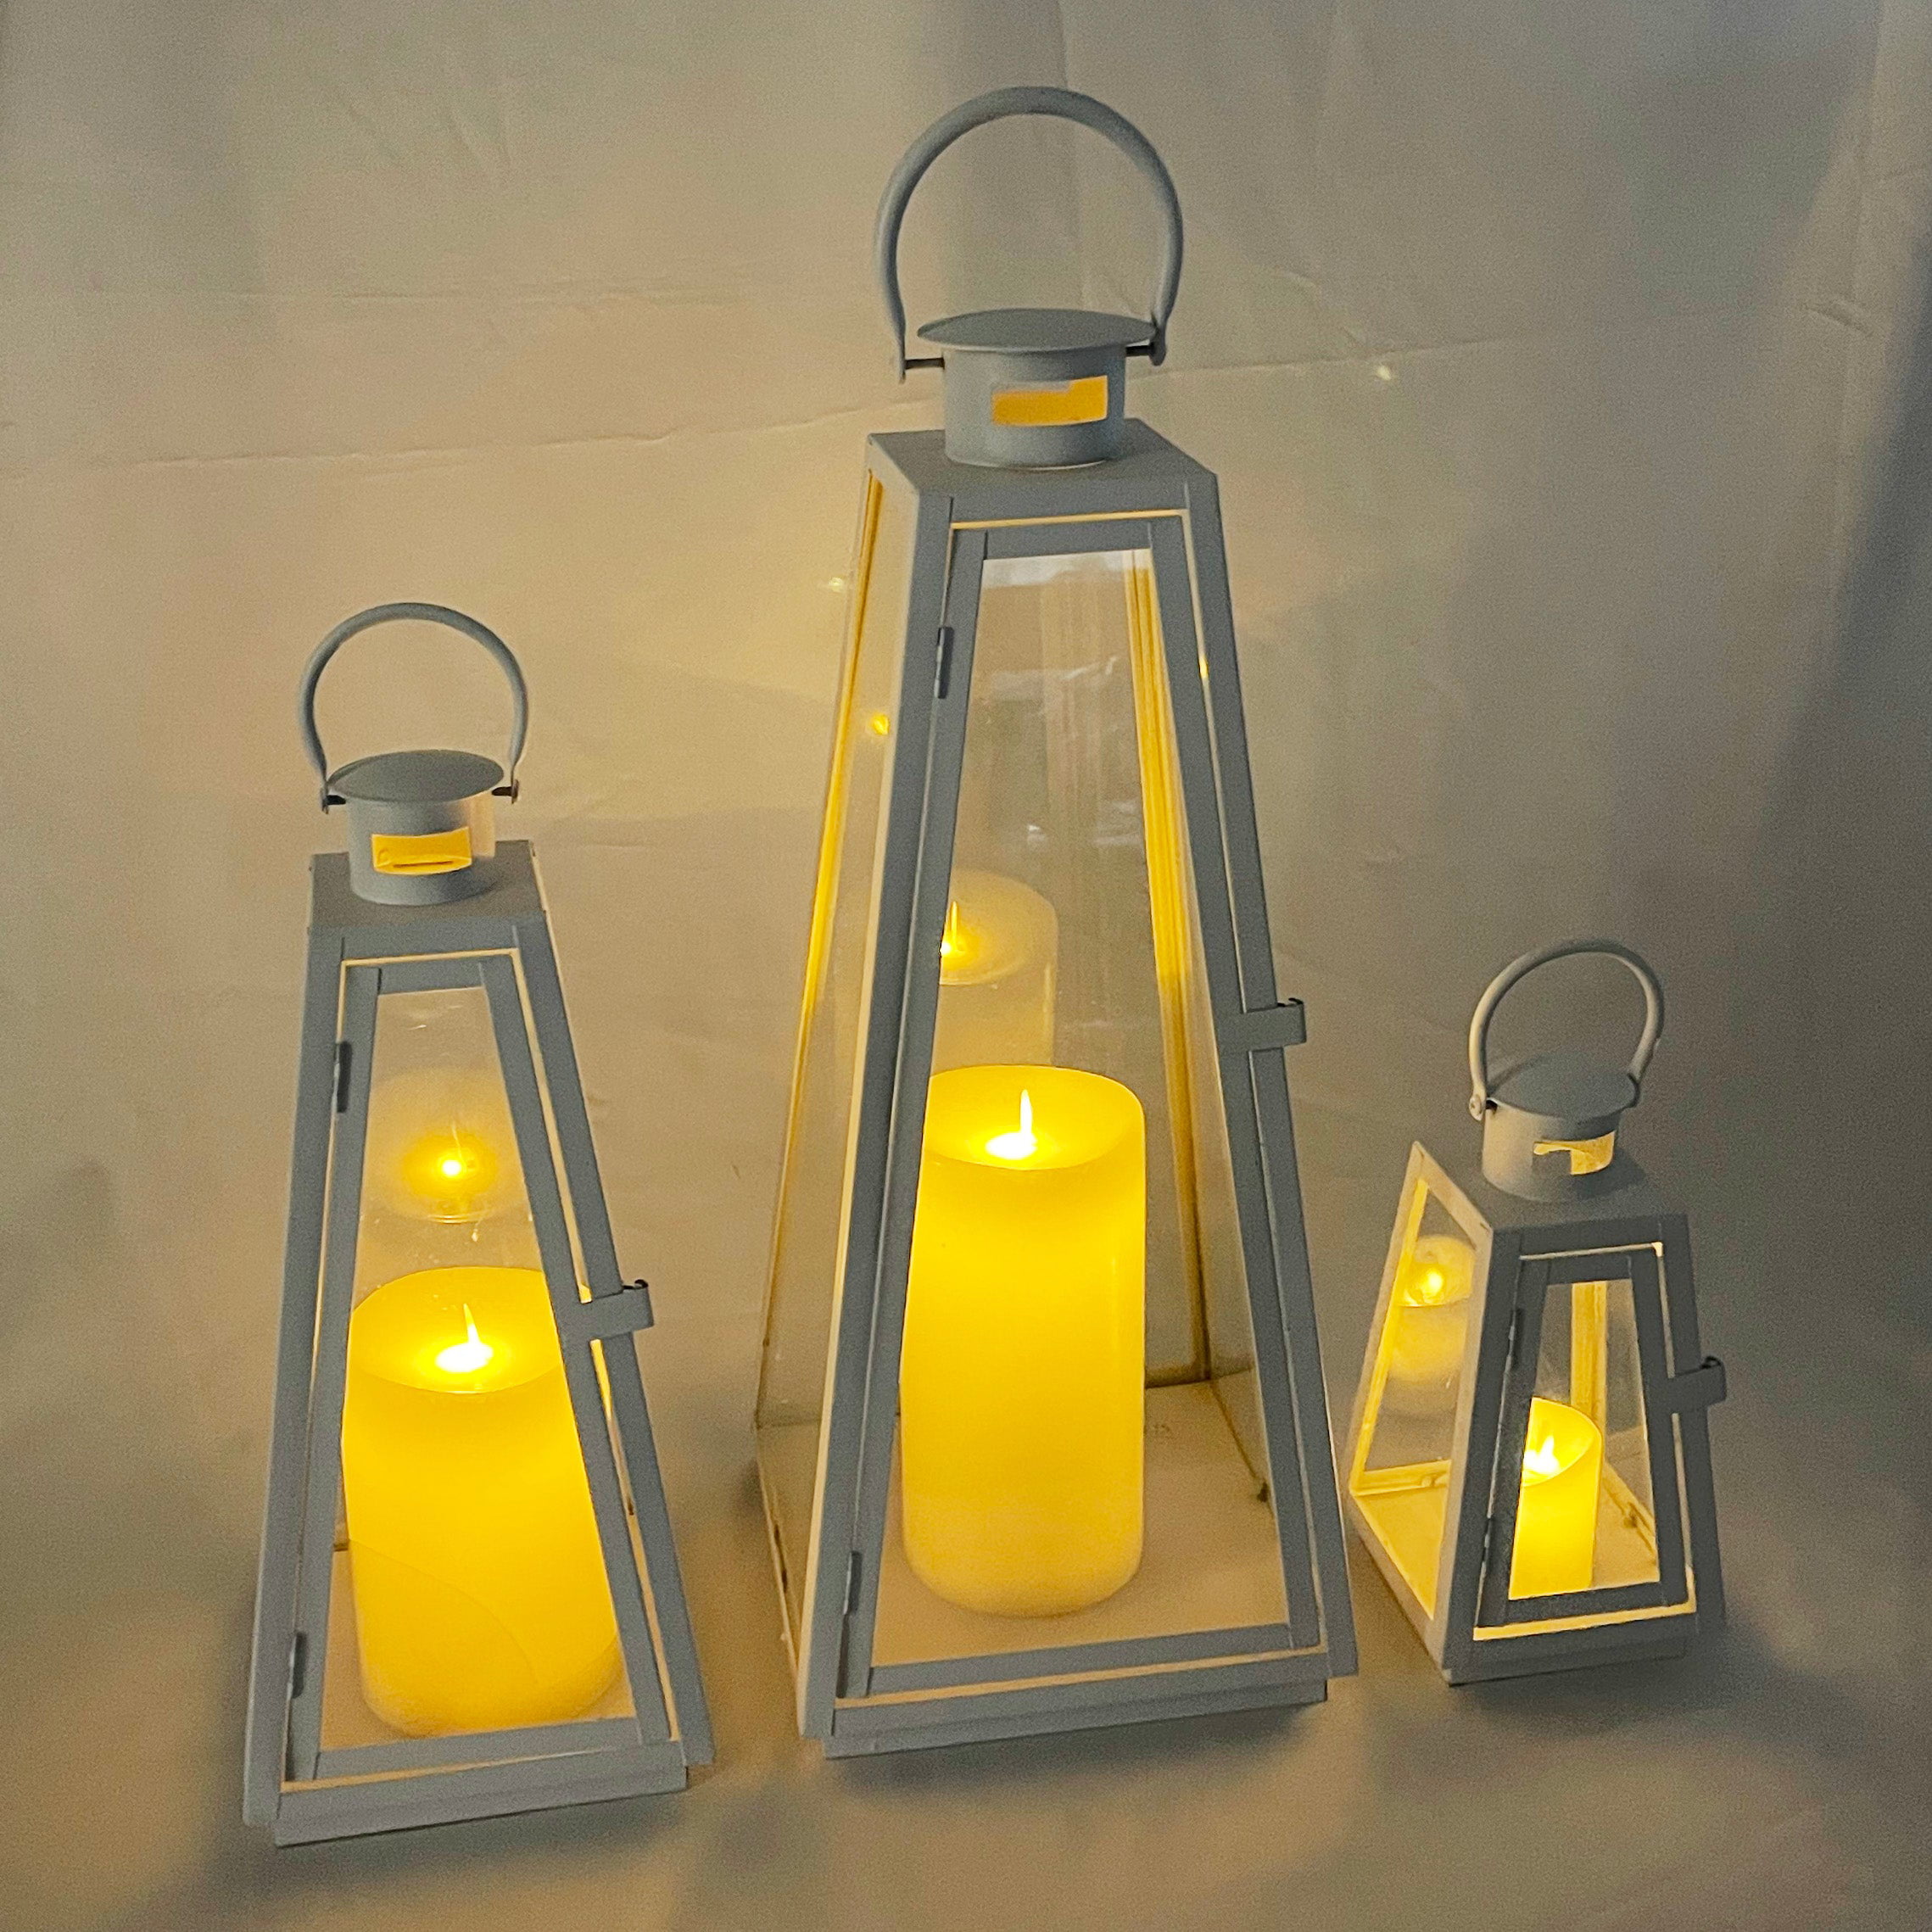 Allgala Lanterns 8 SET 3-PC Set Jumbo Indoor/Outdoor Hurricane Candle